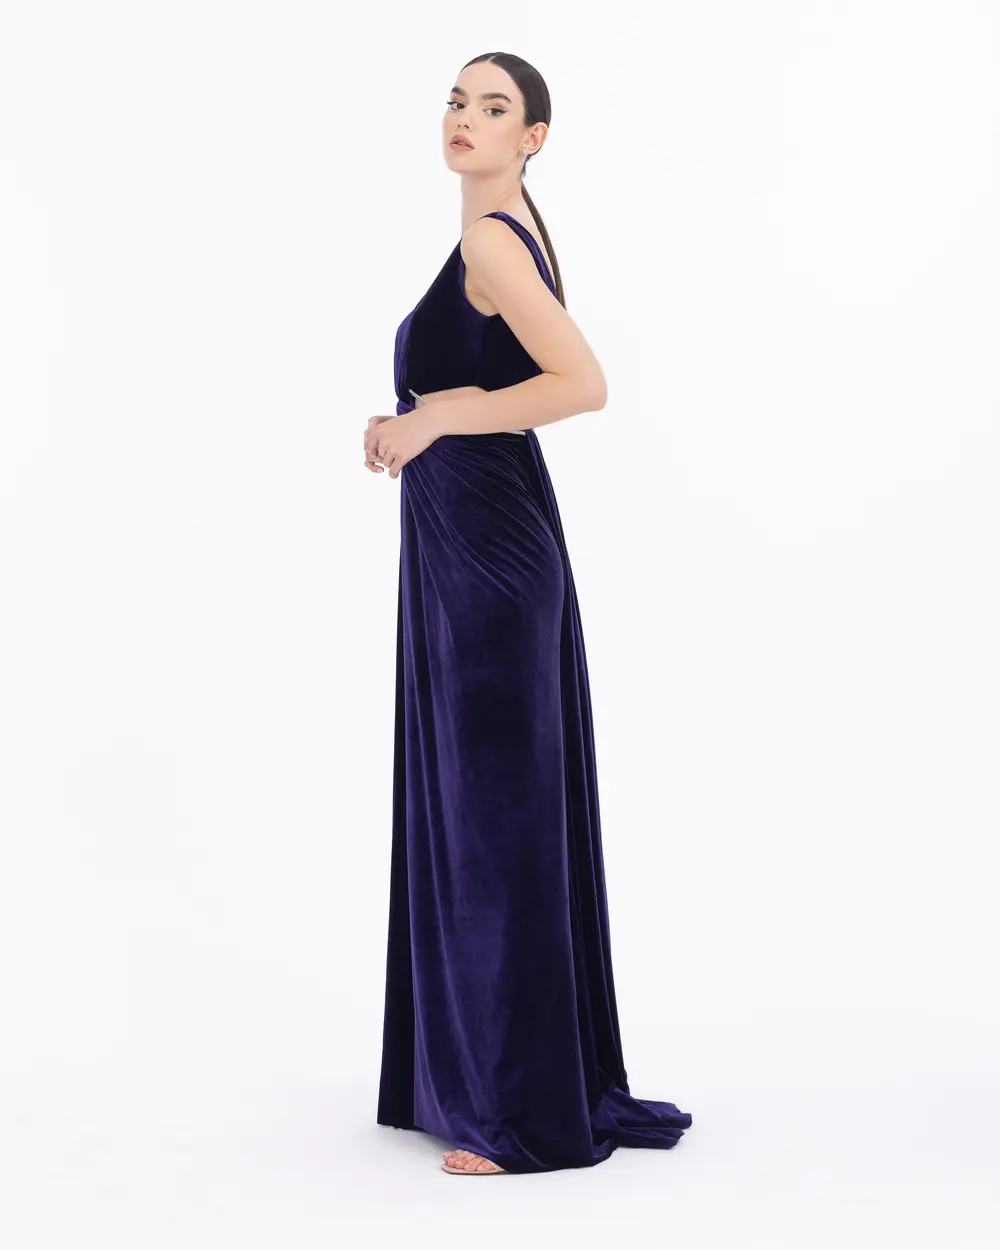 Waist Detailed Accessory Velvet Evening Dress